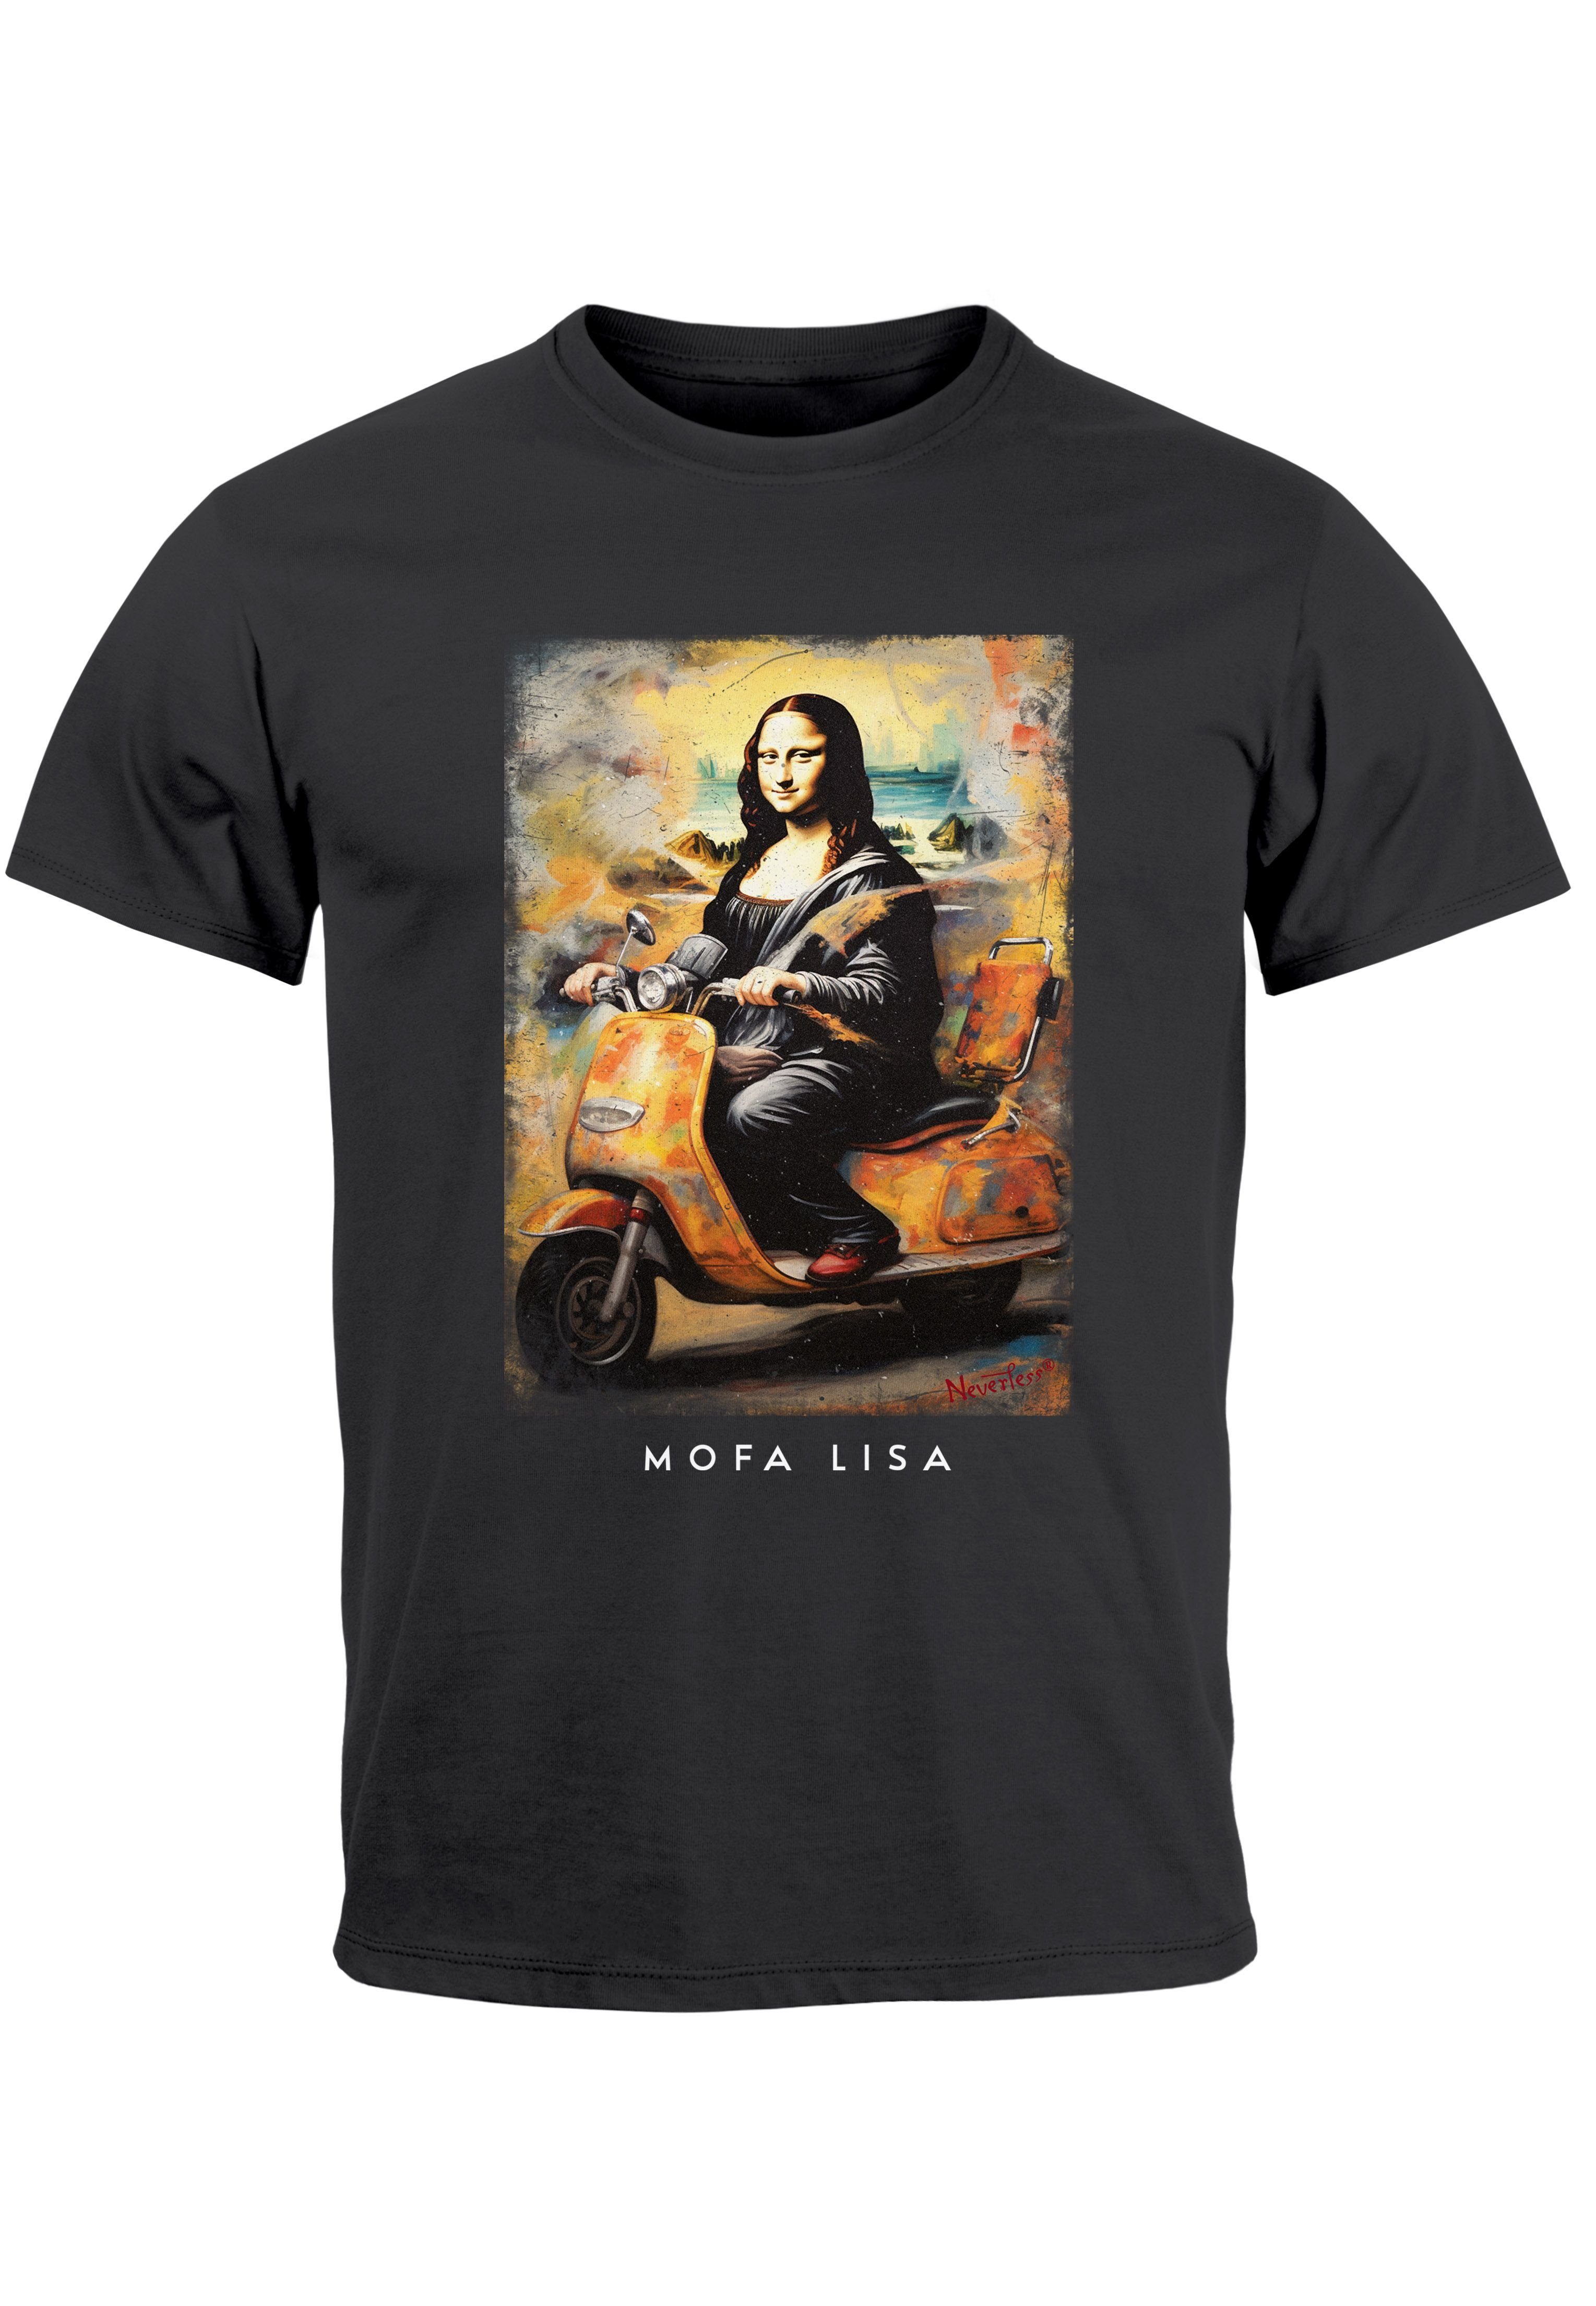 MoonWorks Print-Shirt Herren T-Shirt Print Aufdruck Mona Lisa Parodie Meme Kapuzen-Pullover mit Print Mofa Lisa anthrazit